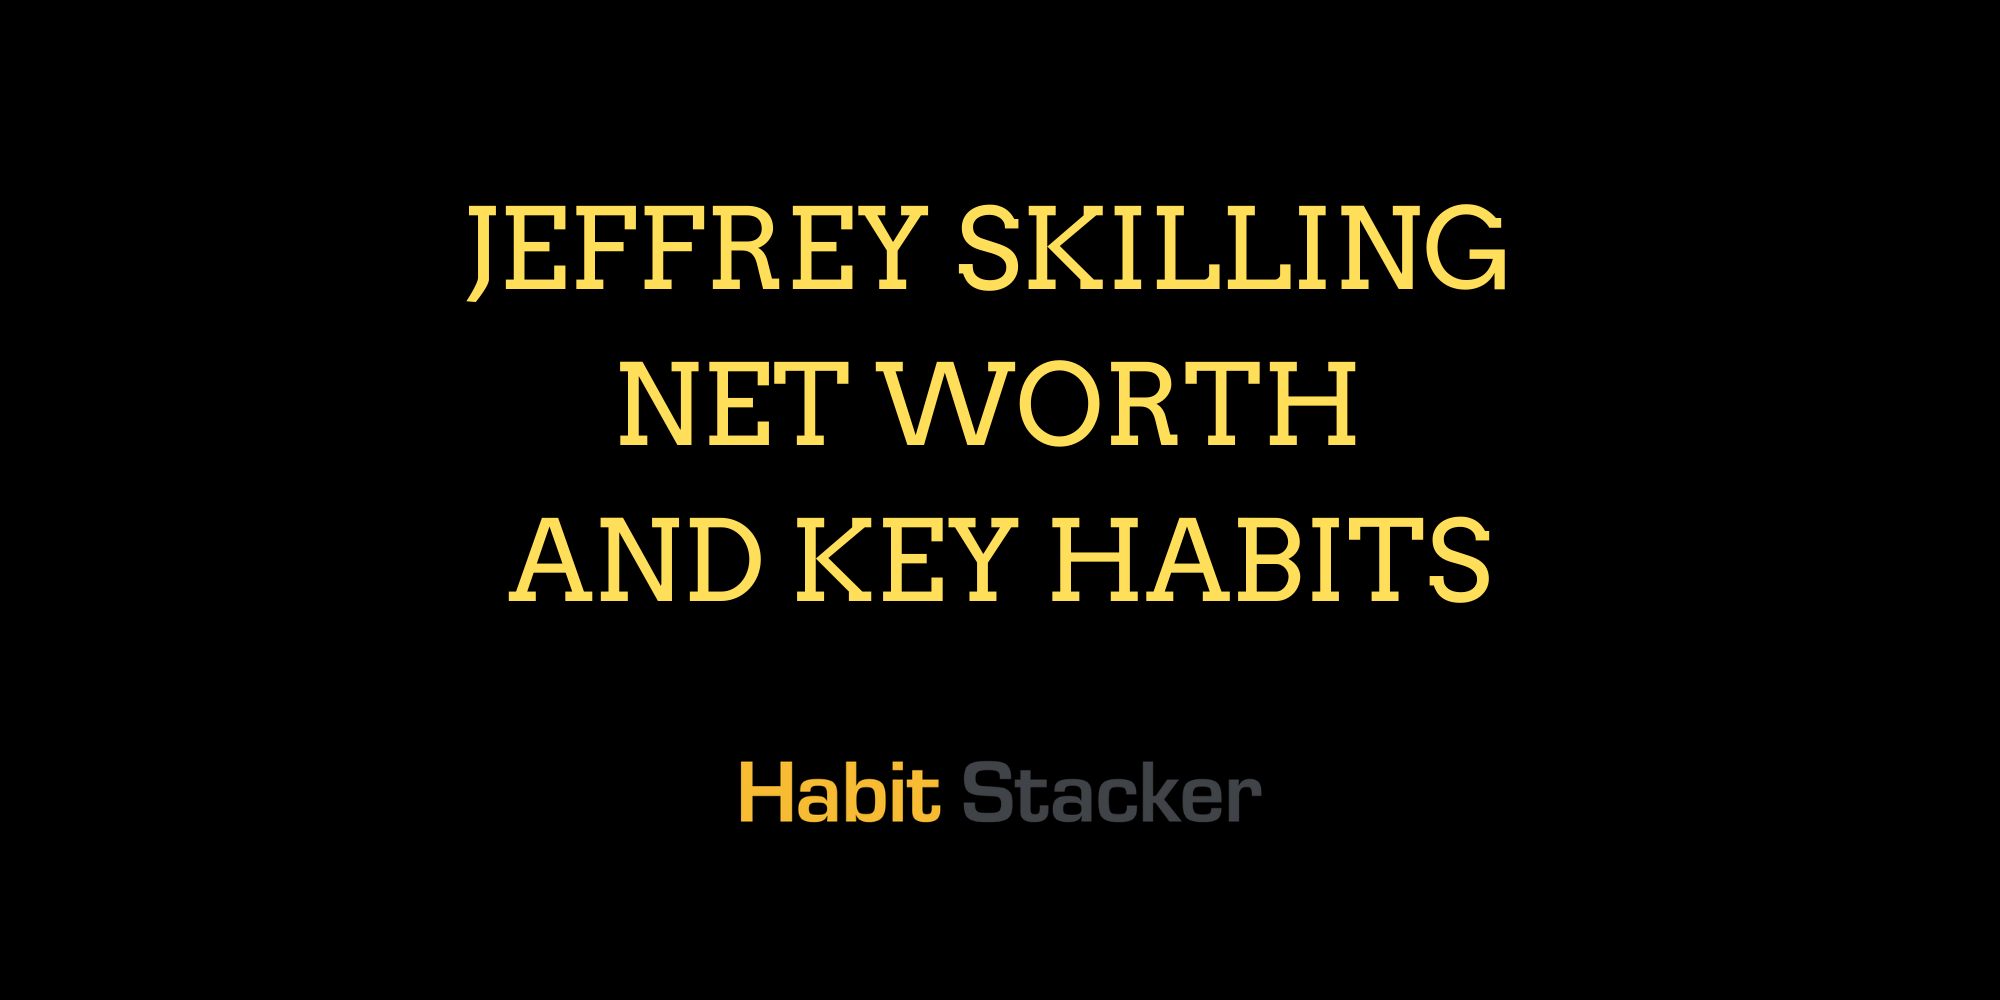 Jeffrey Skilling Net Worth and Key habits